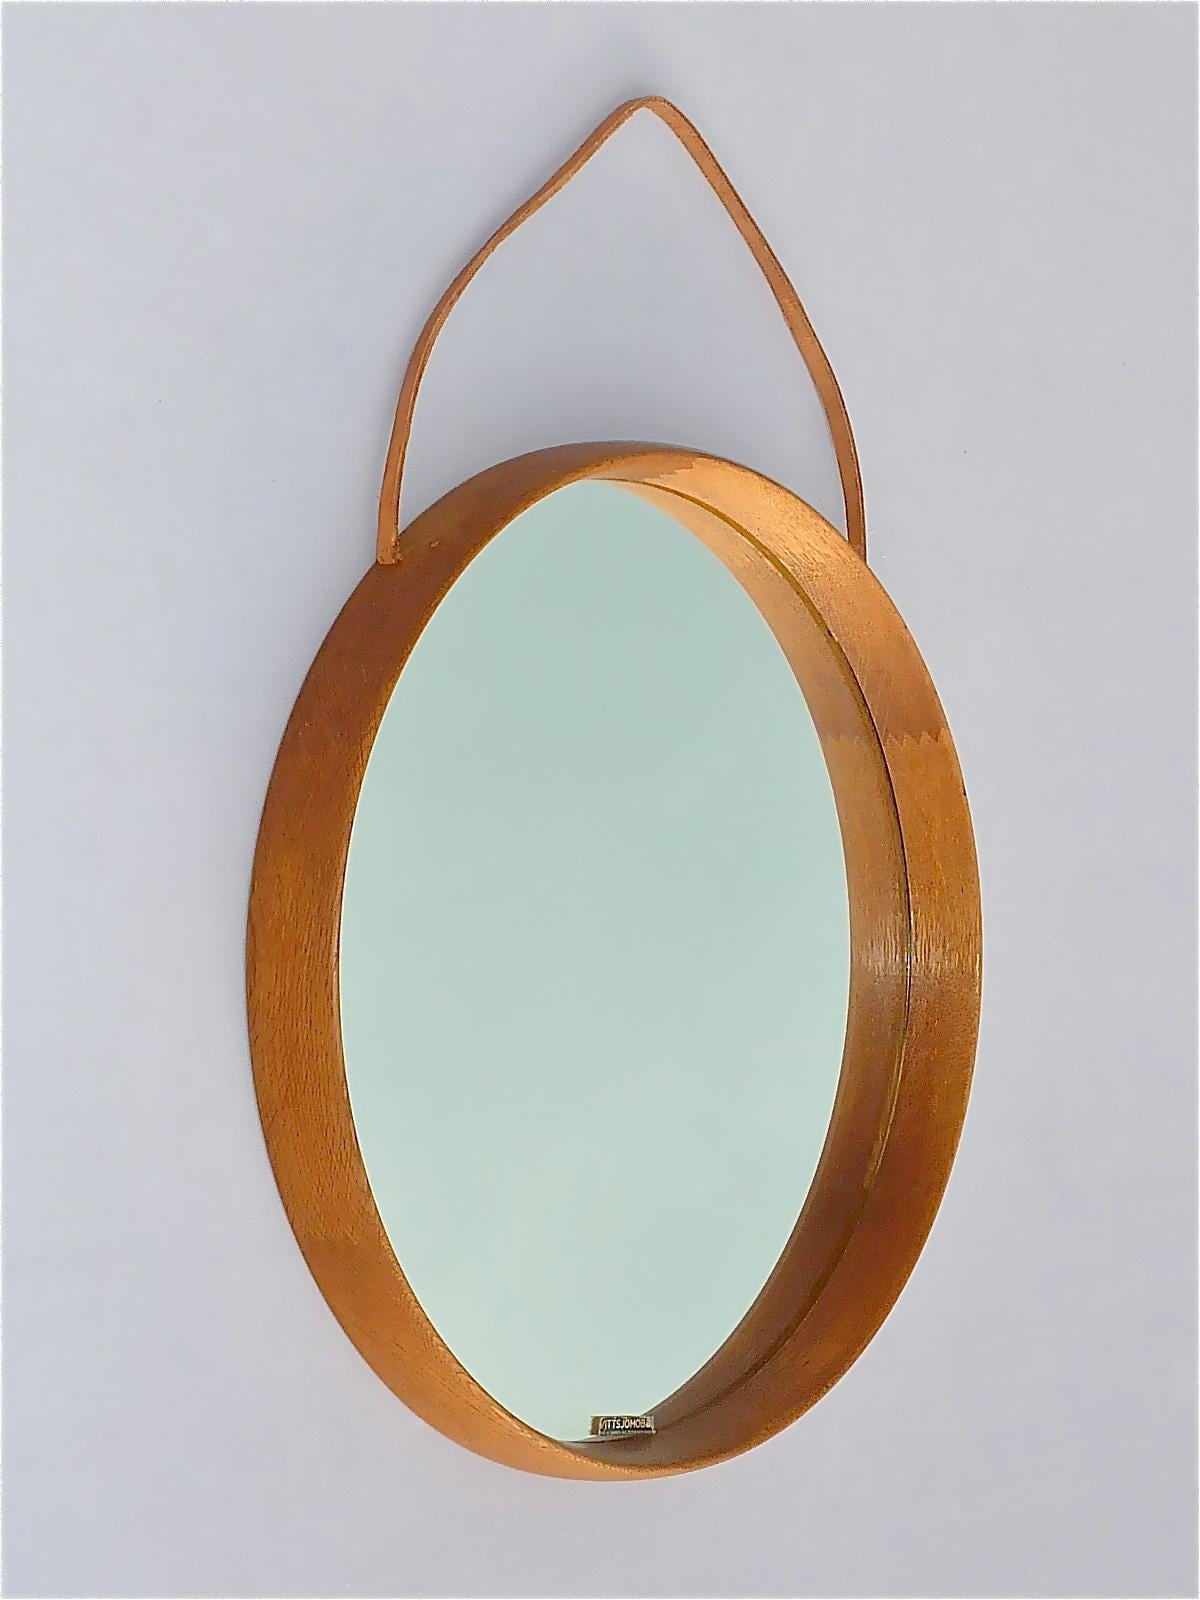 Scandinavian Modern Signed Round Wall Mirror Vittsjö Östen Kristiansson Oak Wood Leather, 1960s For Sale